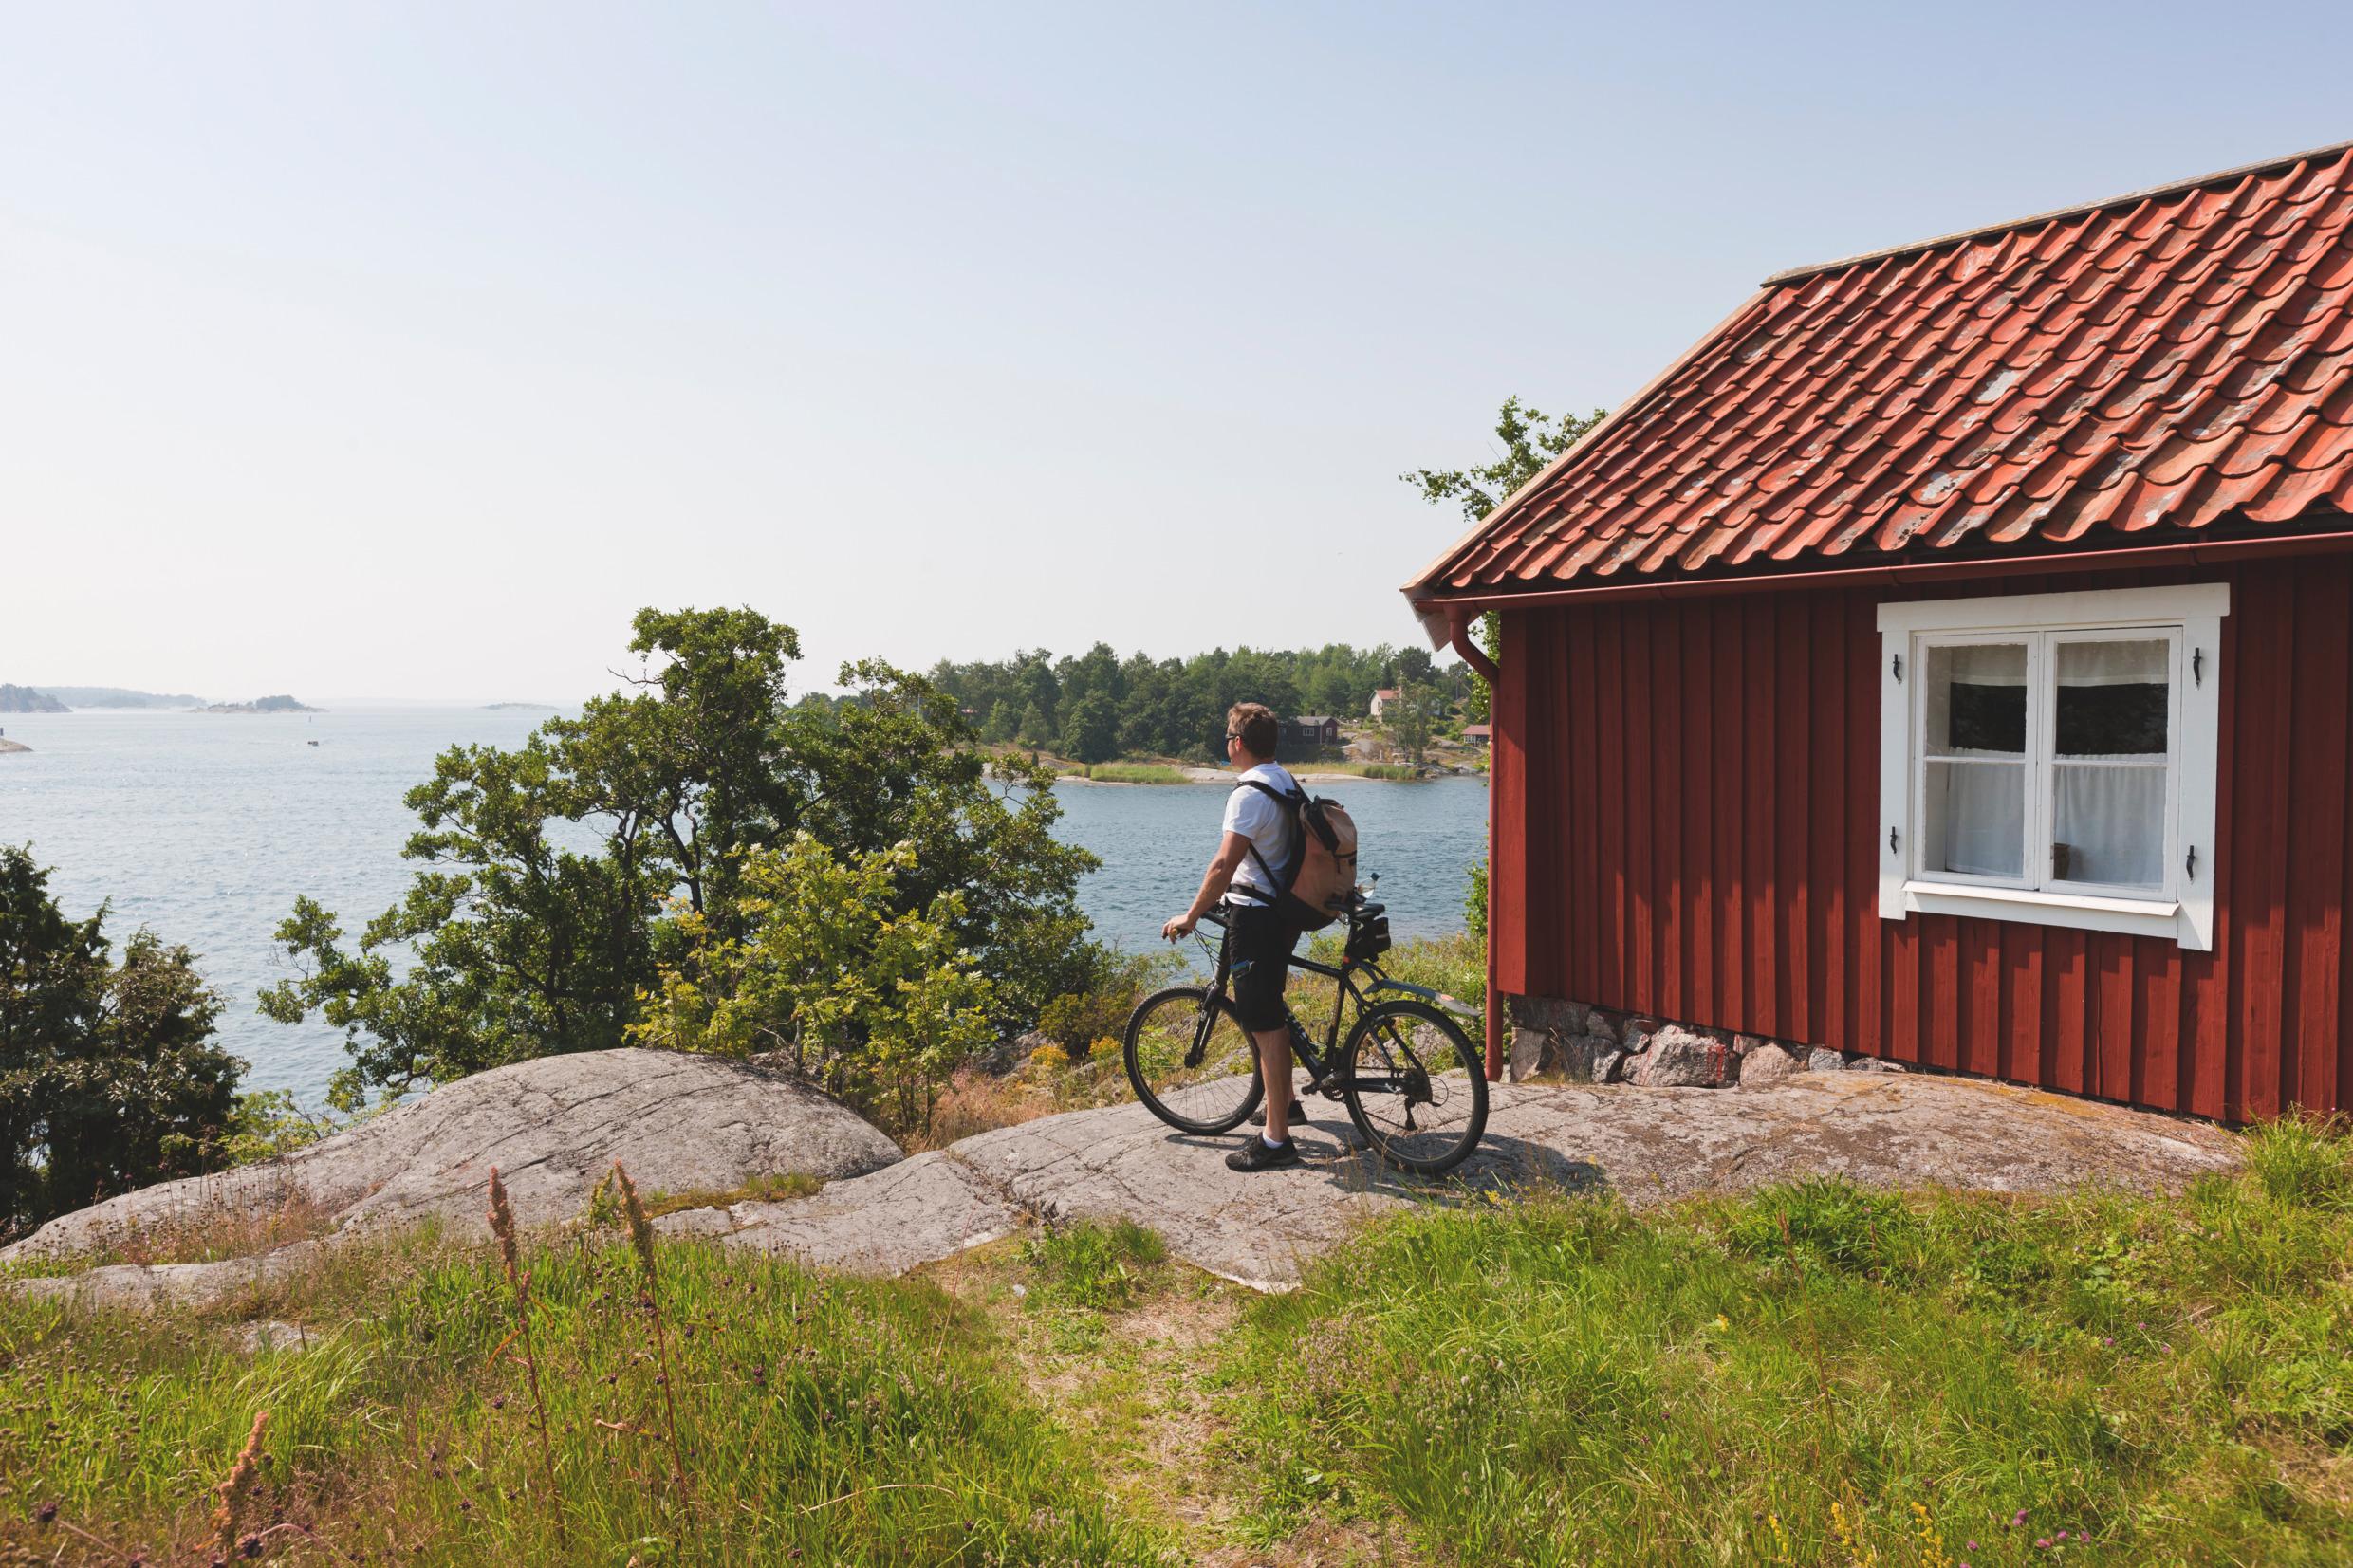 Biking in the archipelago